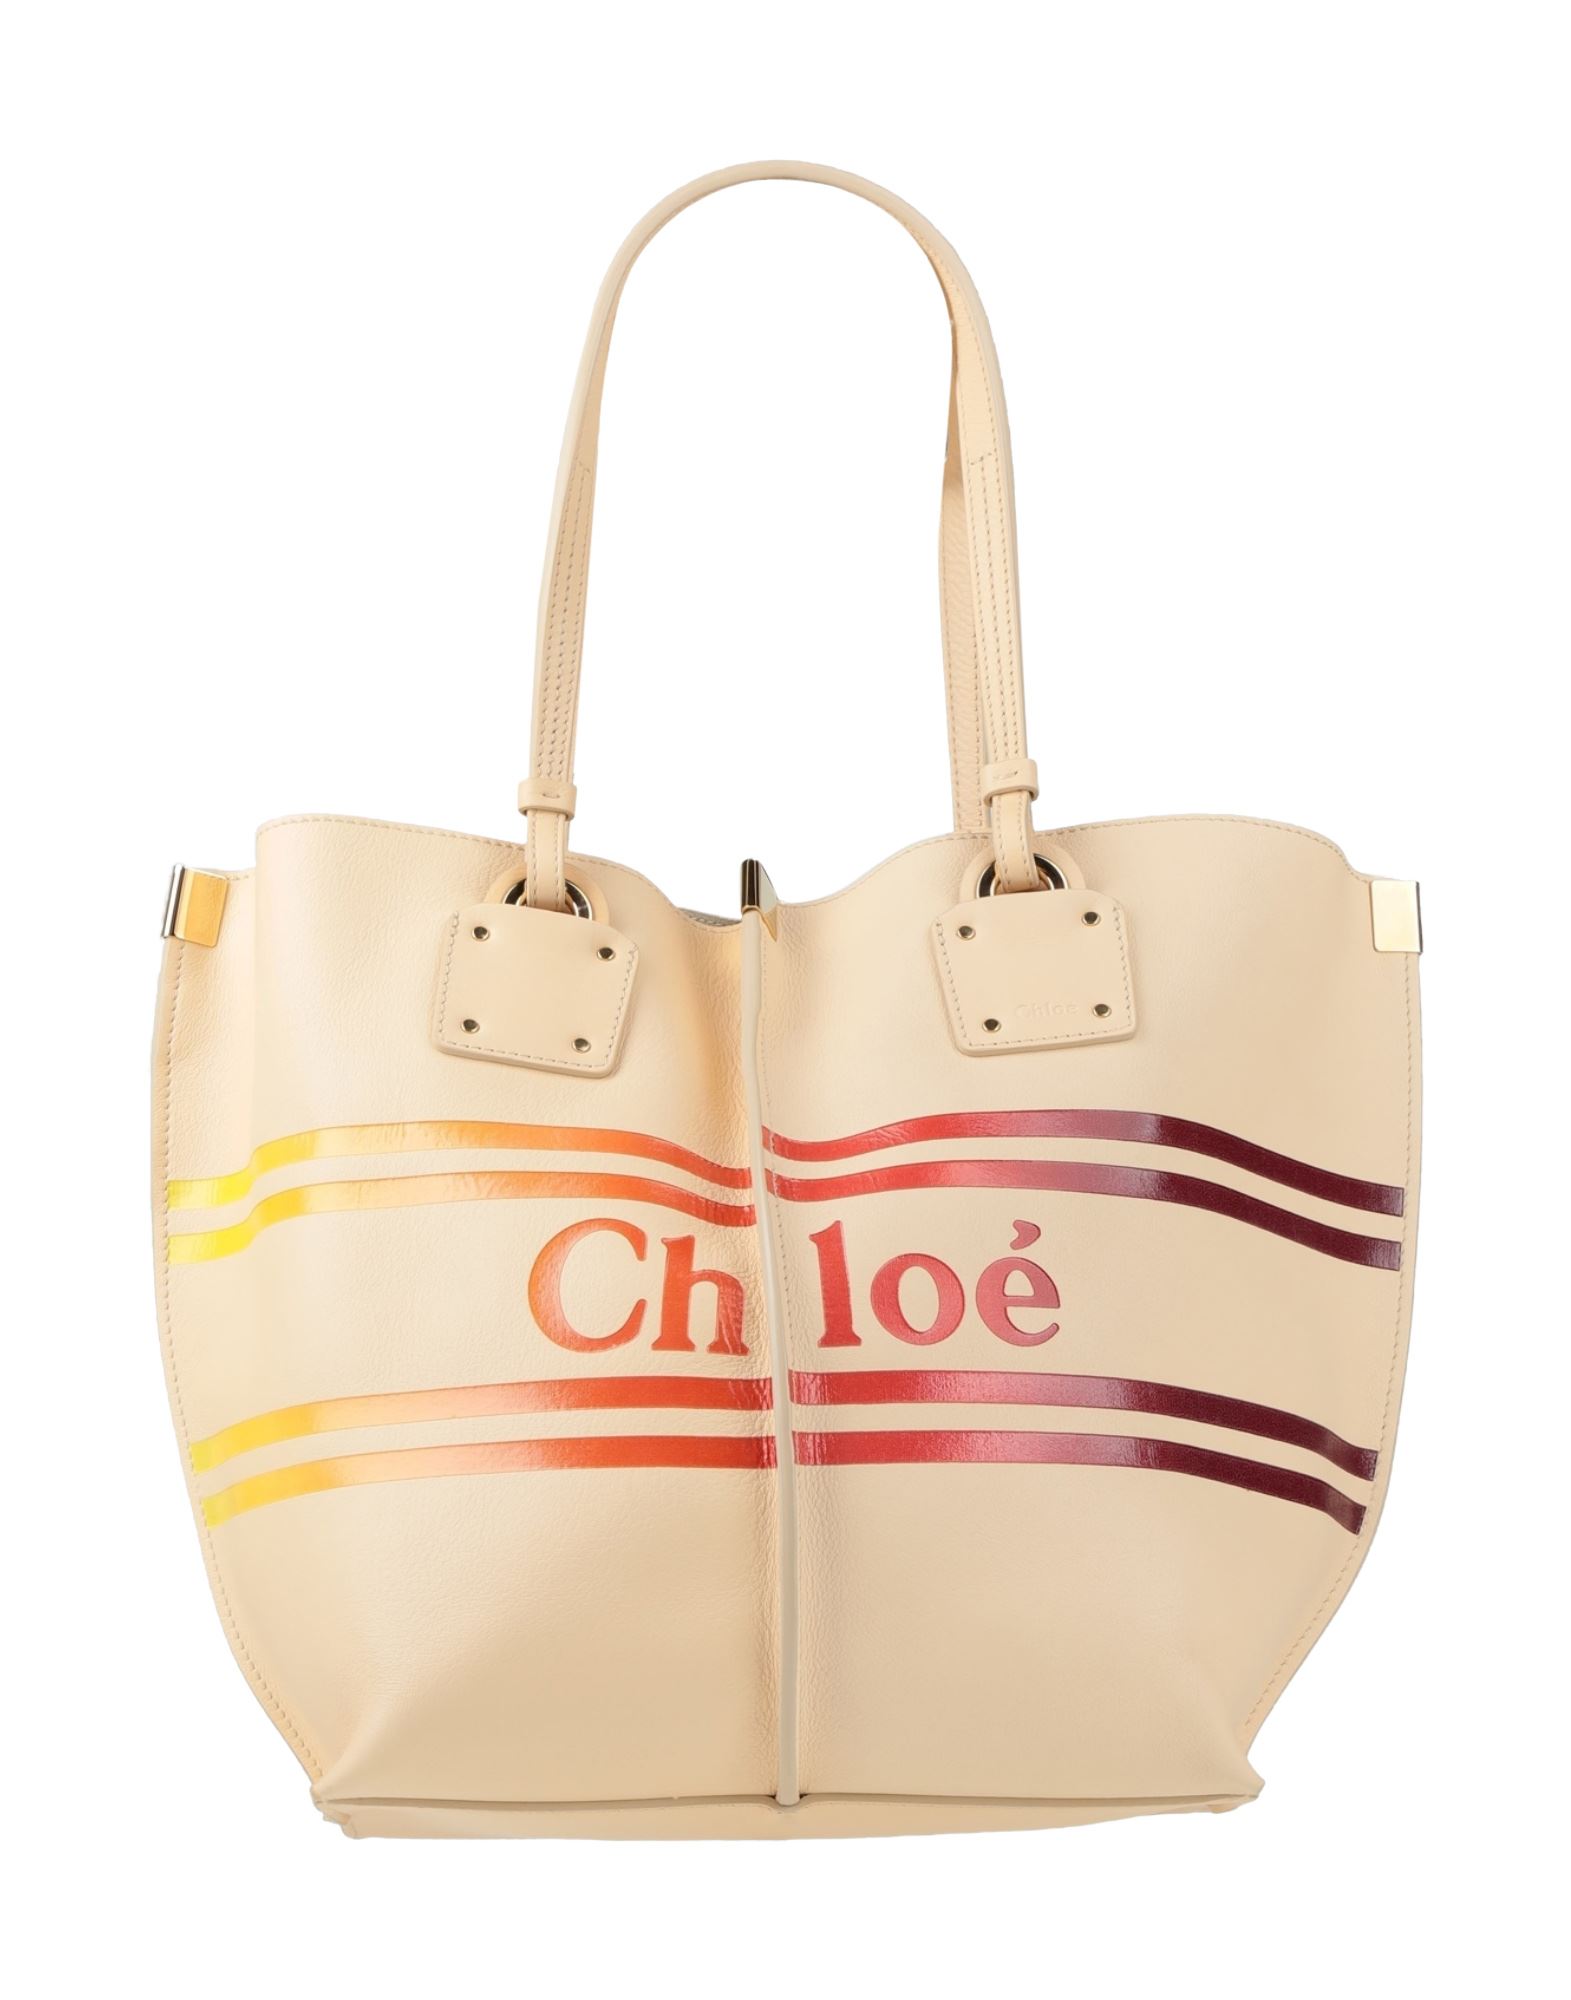 Chloé Handbags In Ivory